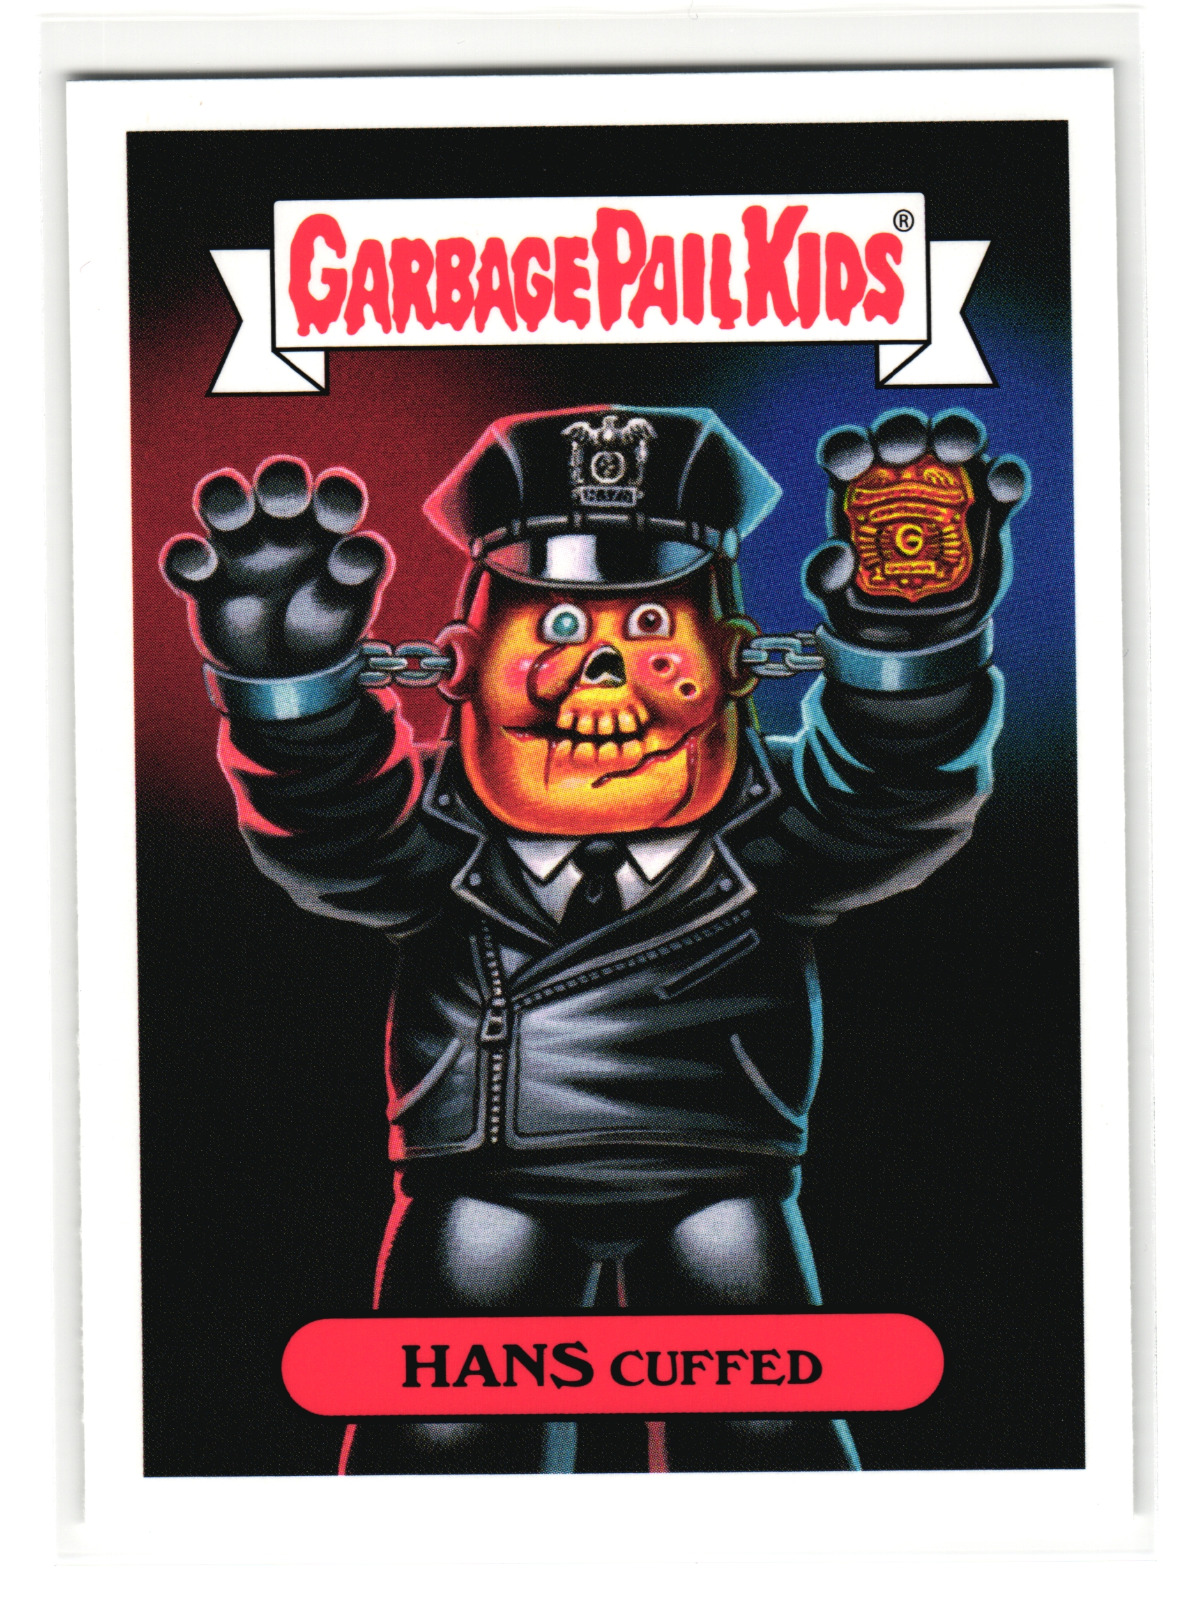 Hans Cuffed (9A) 2019 Garbage Pail Kids Maniac Cop 1988 Parody Collectible Card